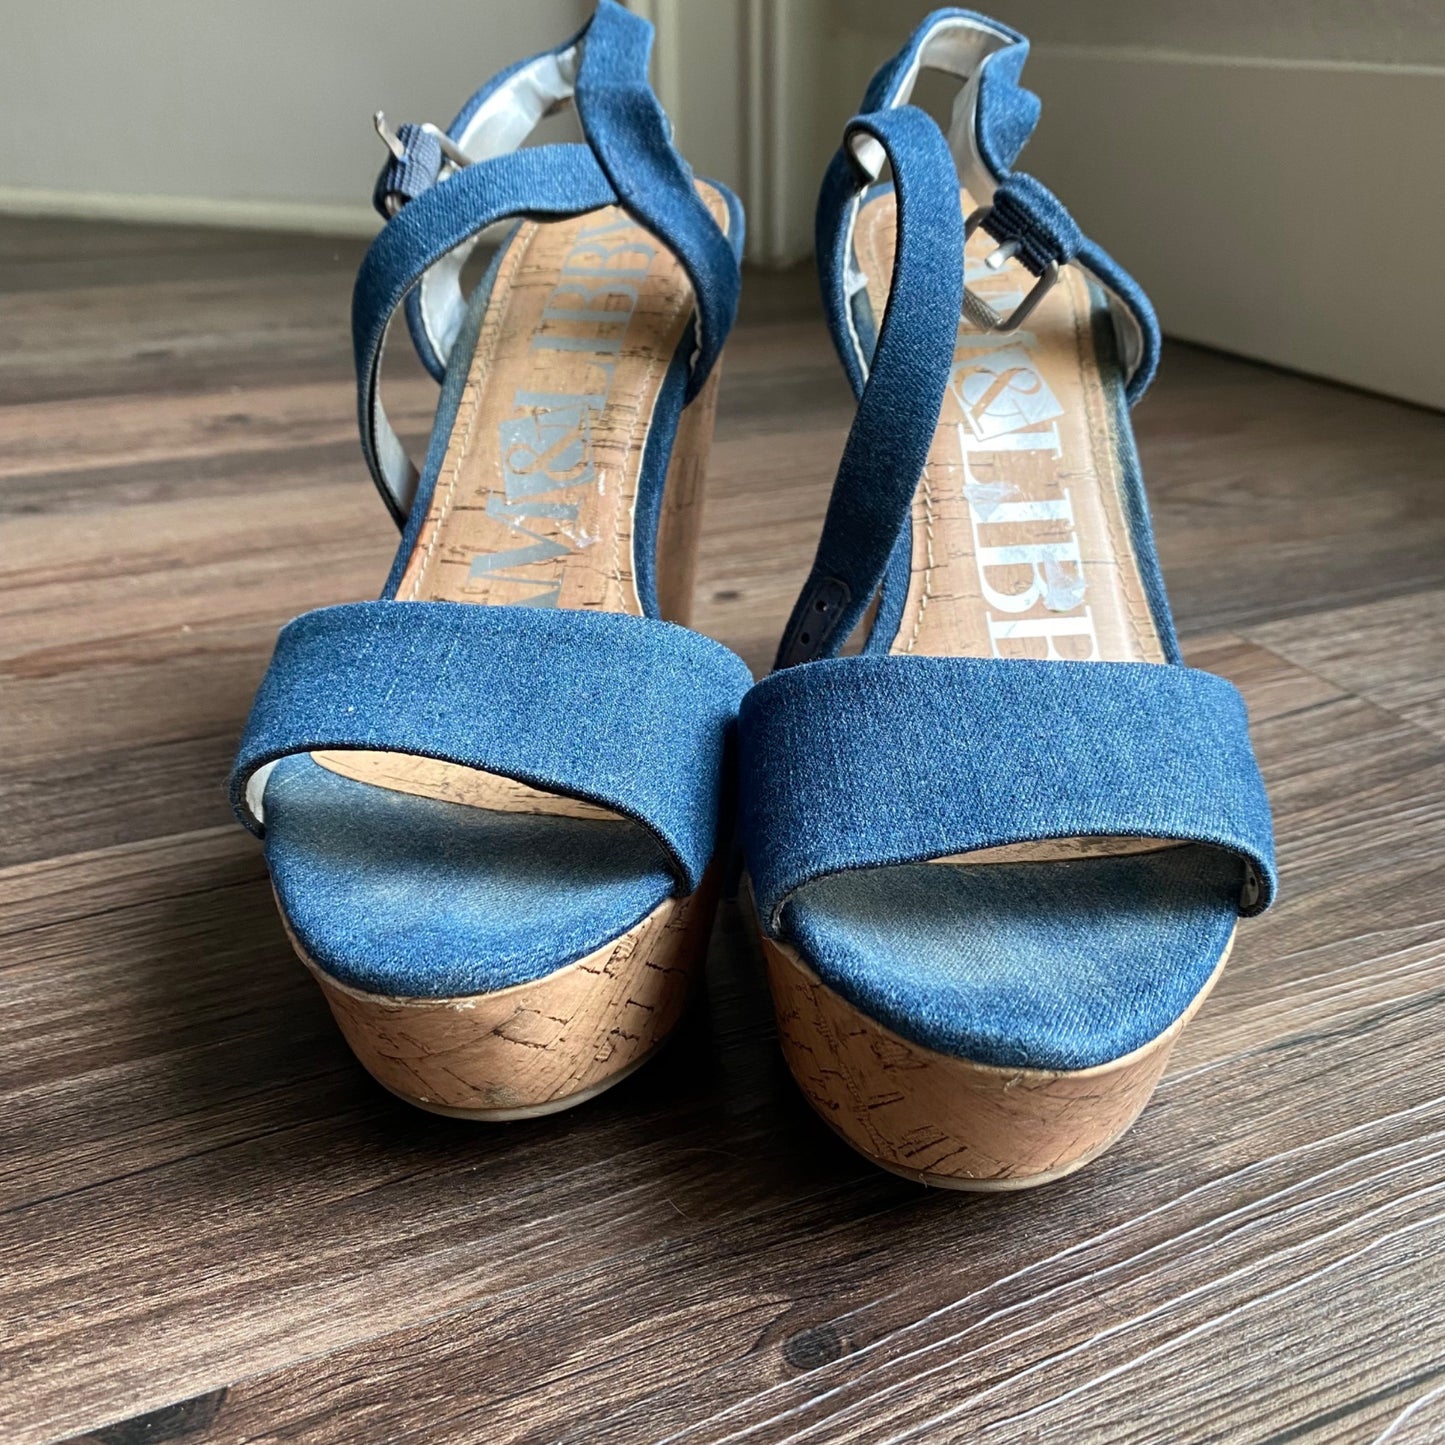 Sam & Libby sz 7.5 ankle strap jean platform 5 " wedge shoes heels